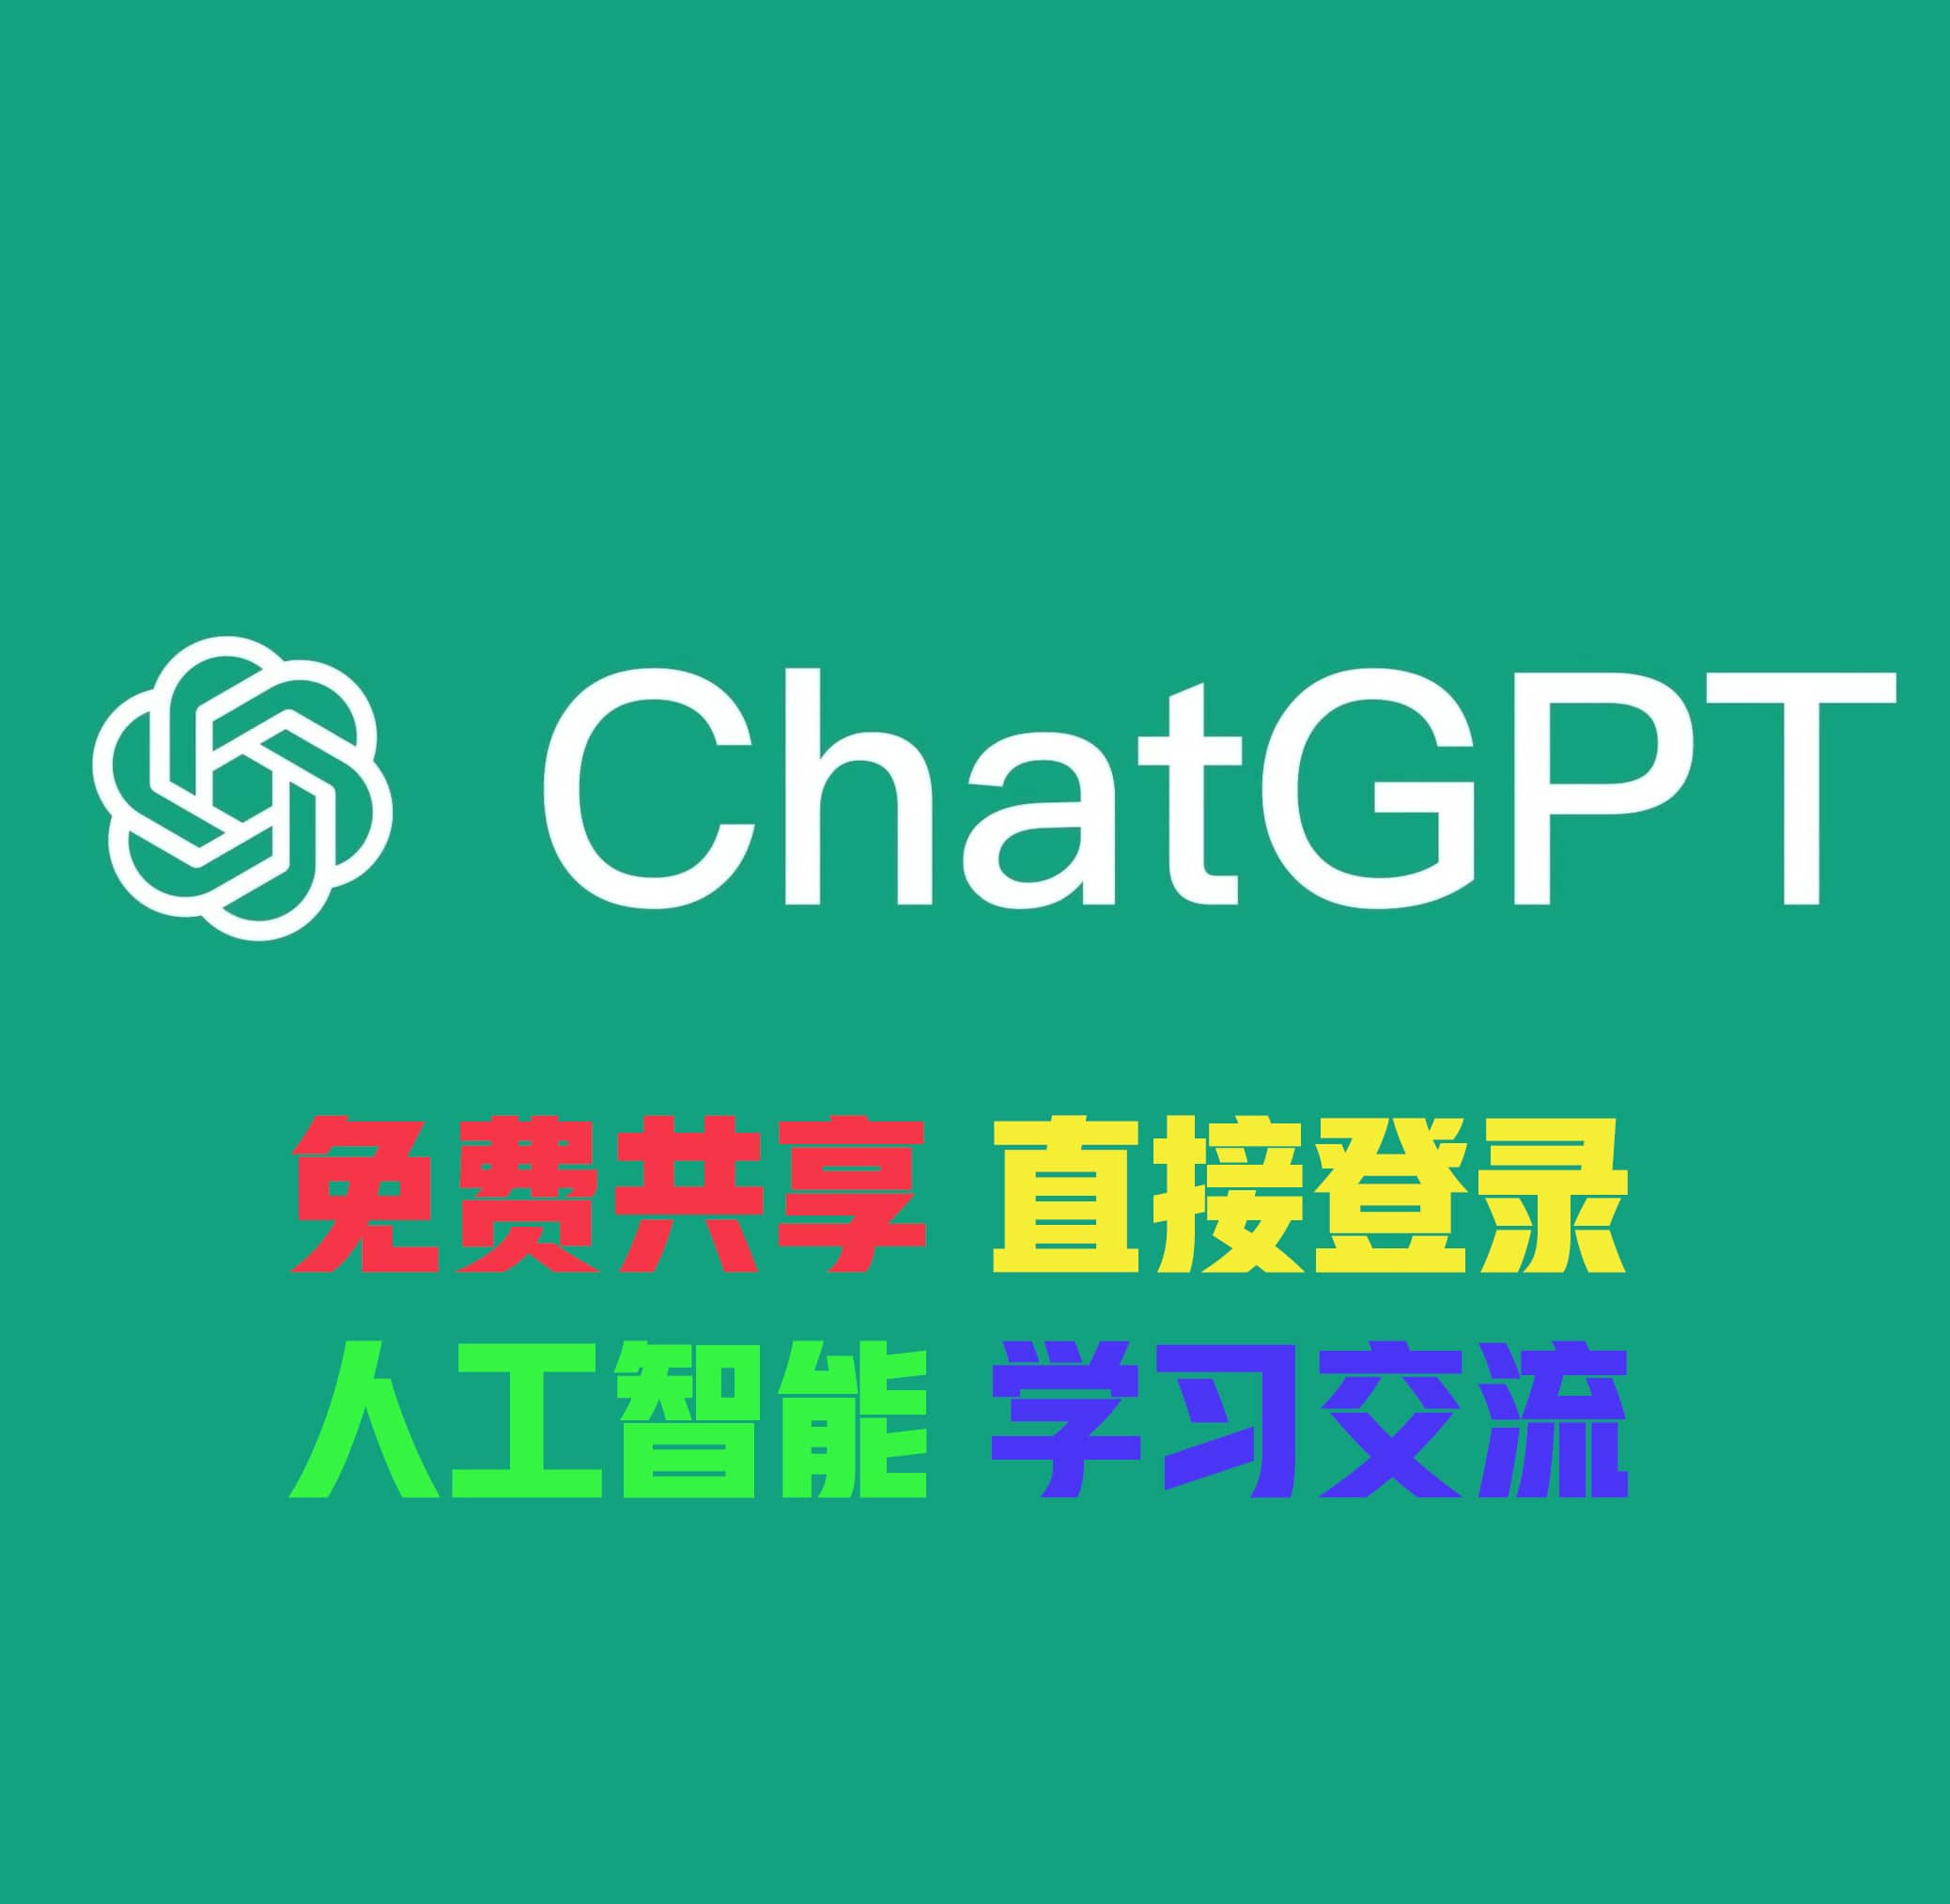 ChatGPT 免费|账号共享|图片识别|注册登录|毕业季论文|中文|AI人工智能